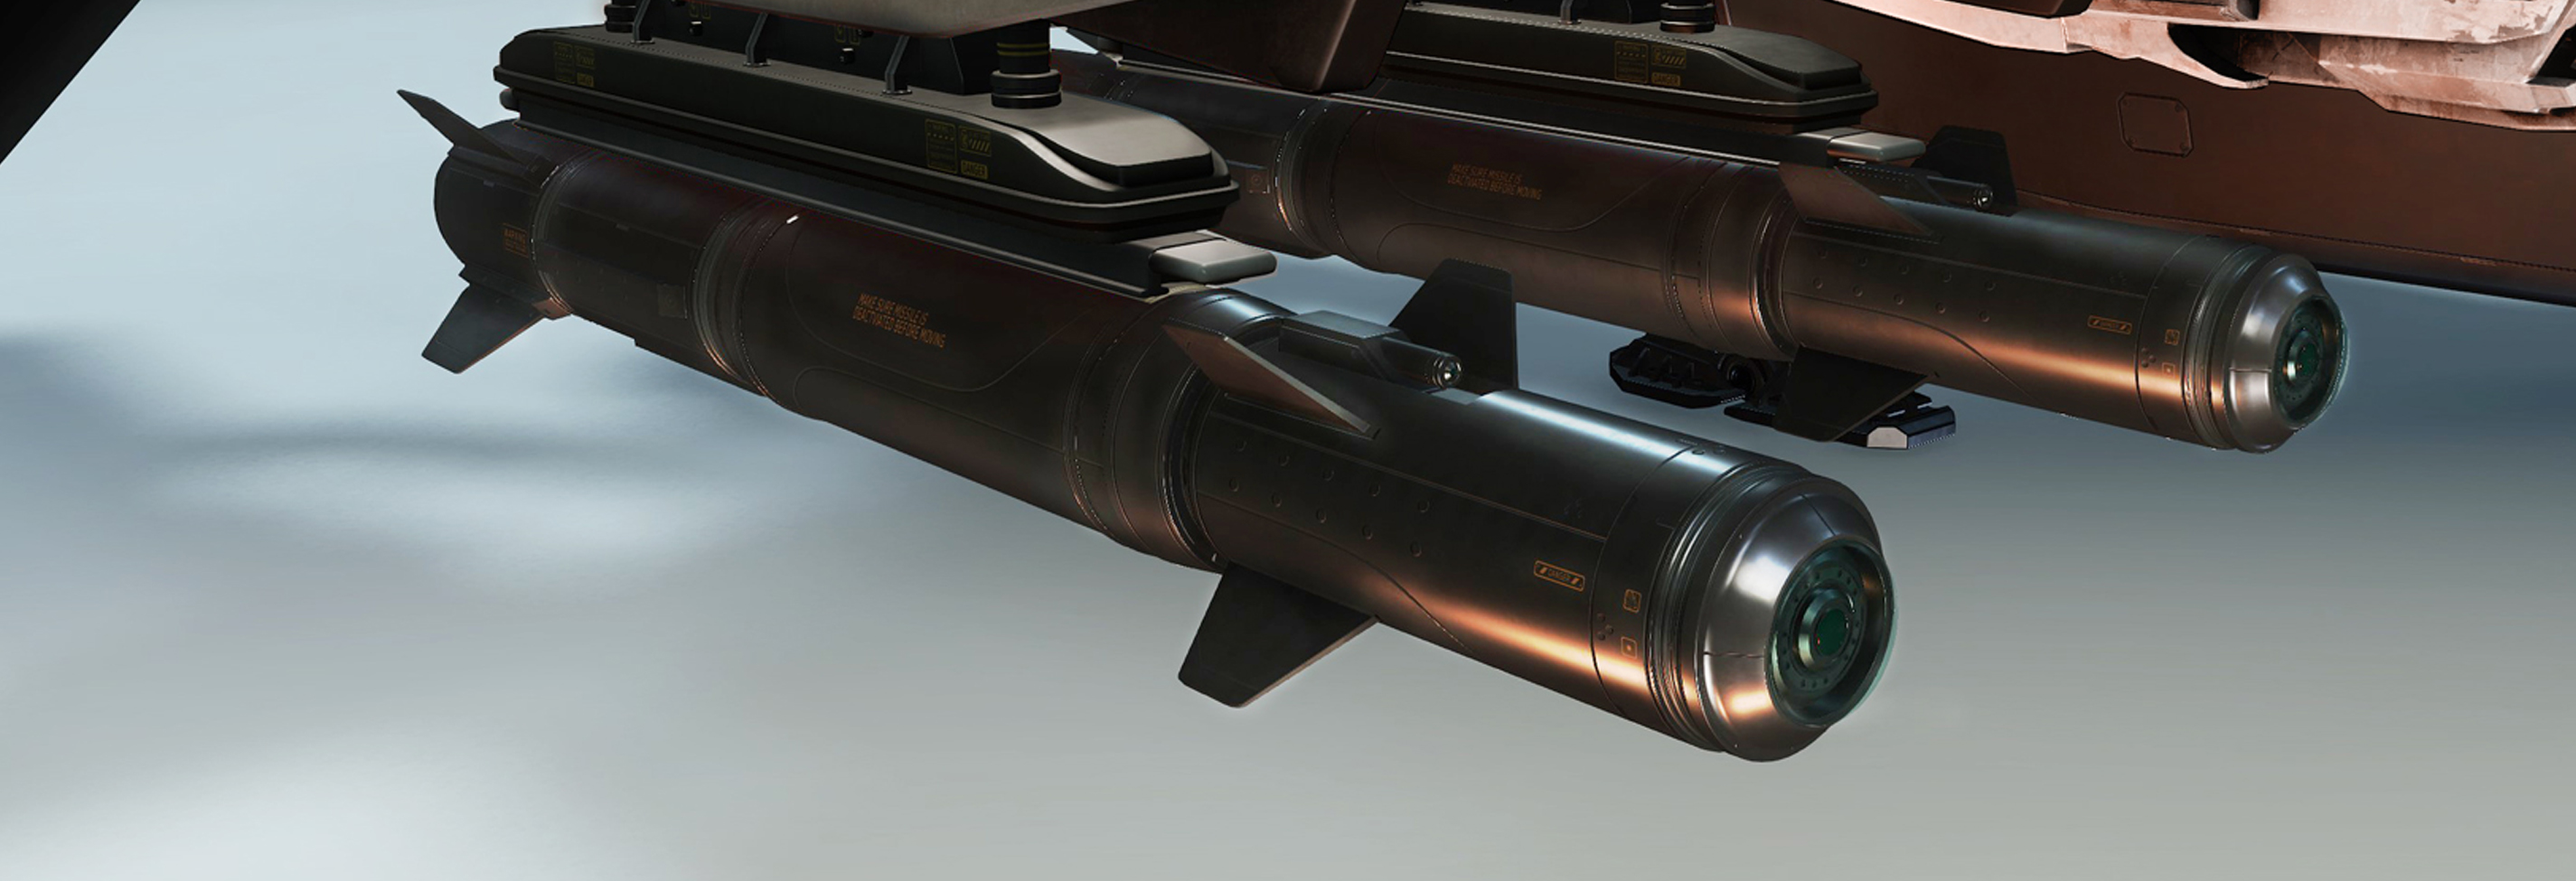 Datei:Anvil Aerospace Gladiator-WB Missiles v2.jpg